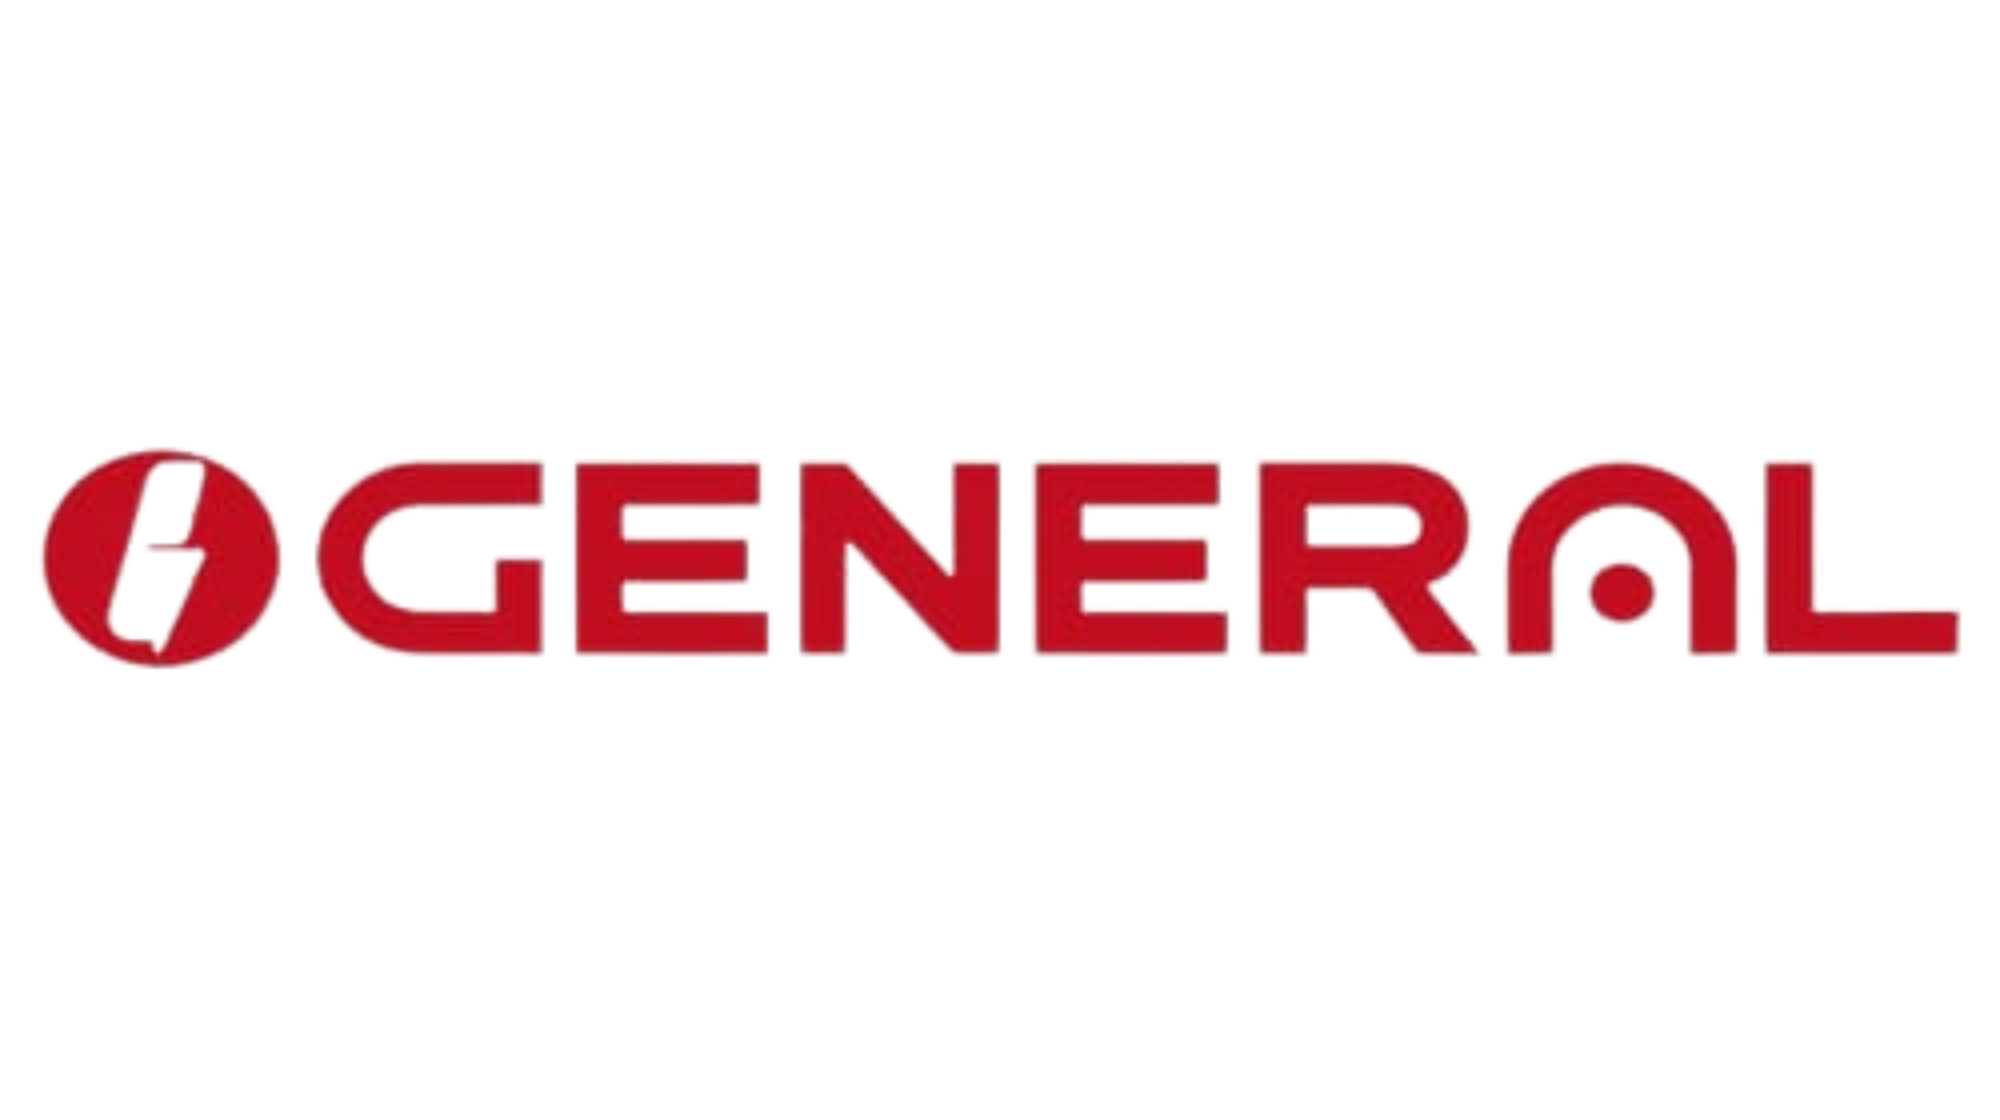 O General Logo